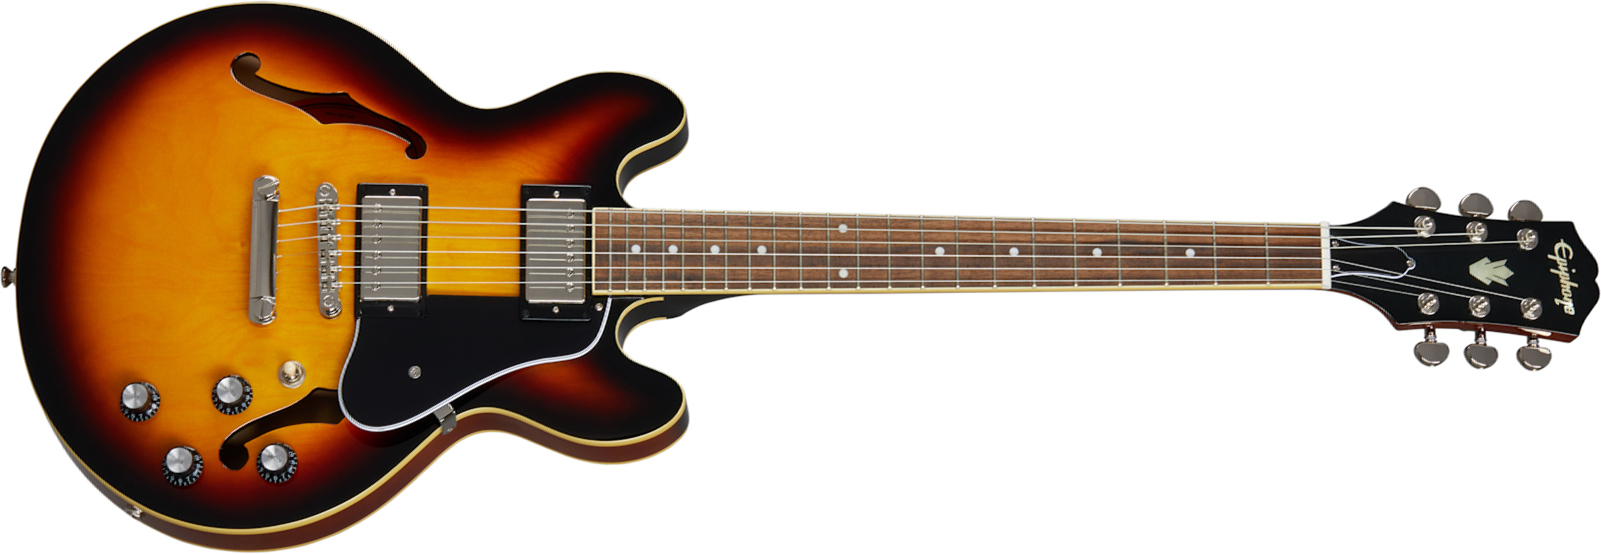 Epiphone Es-339 Inspired By Gibson 2020 2h Ht Rw - Vintage Sunburst - Semi hollow elektriche gitaar - Main picture